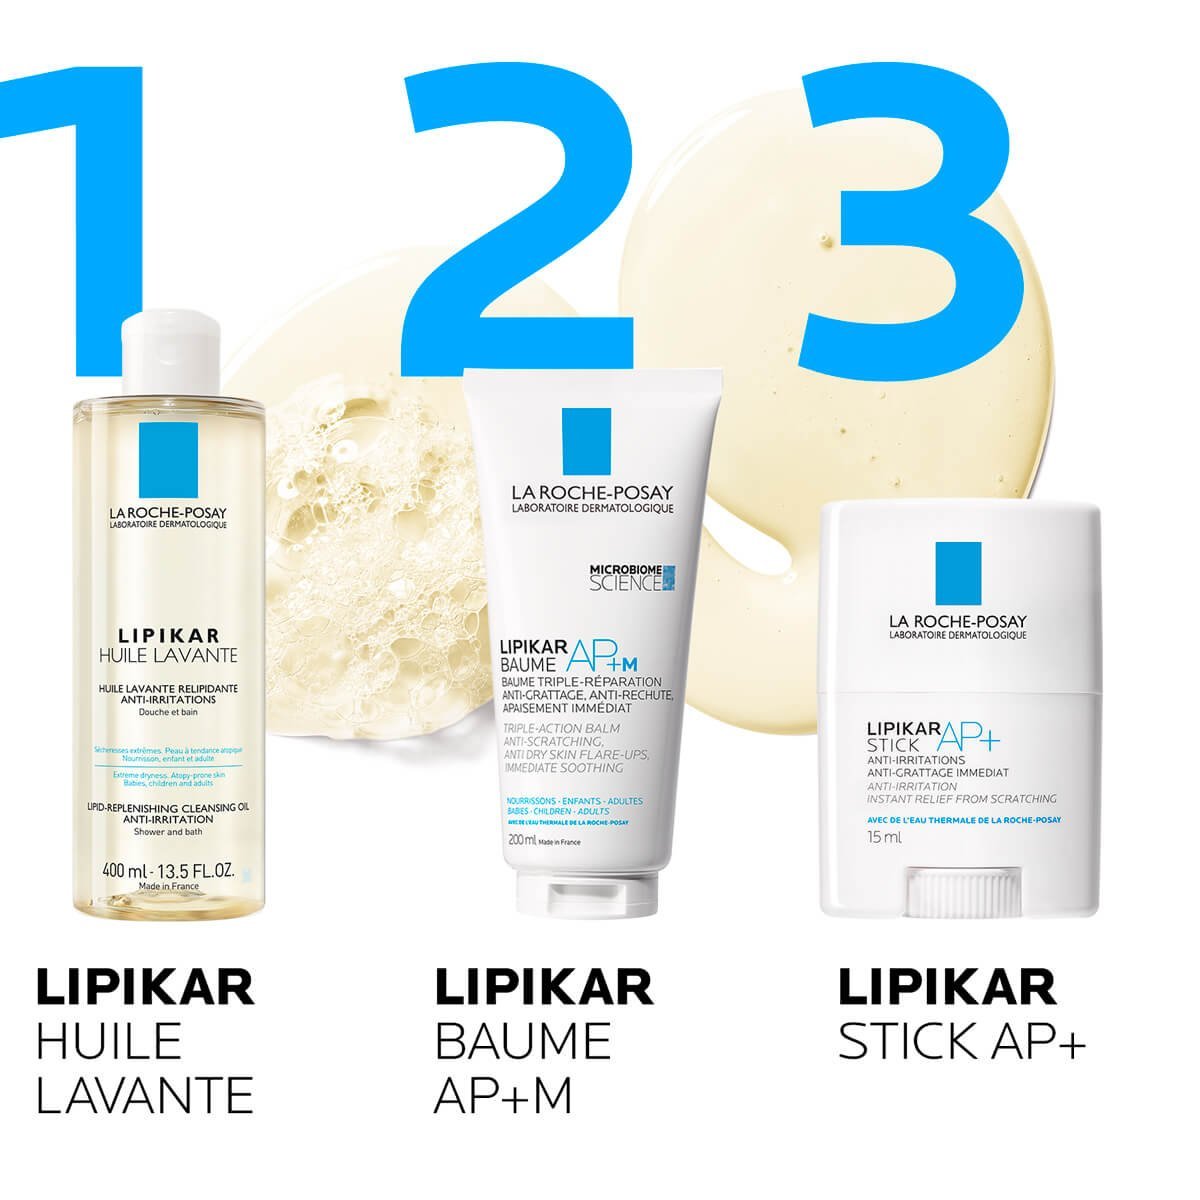 A photo of a bottle of Lipikar Huile Lavante AP+ skincare product on a white background